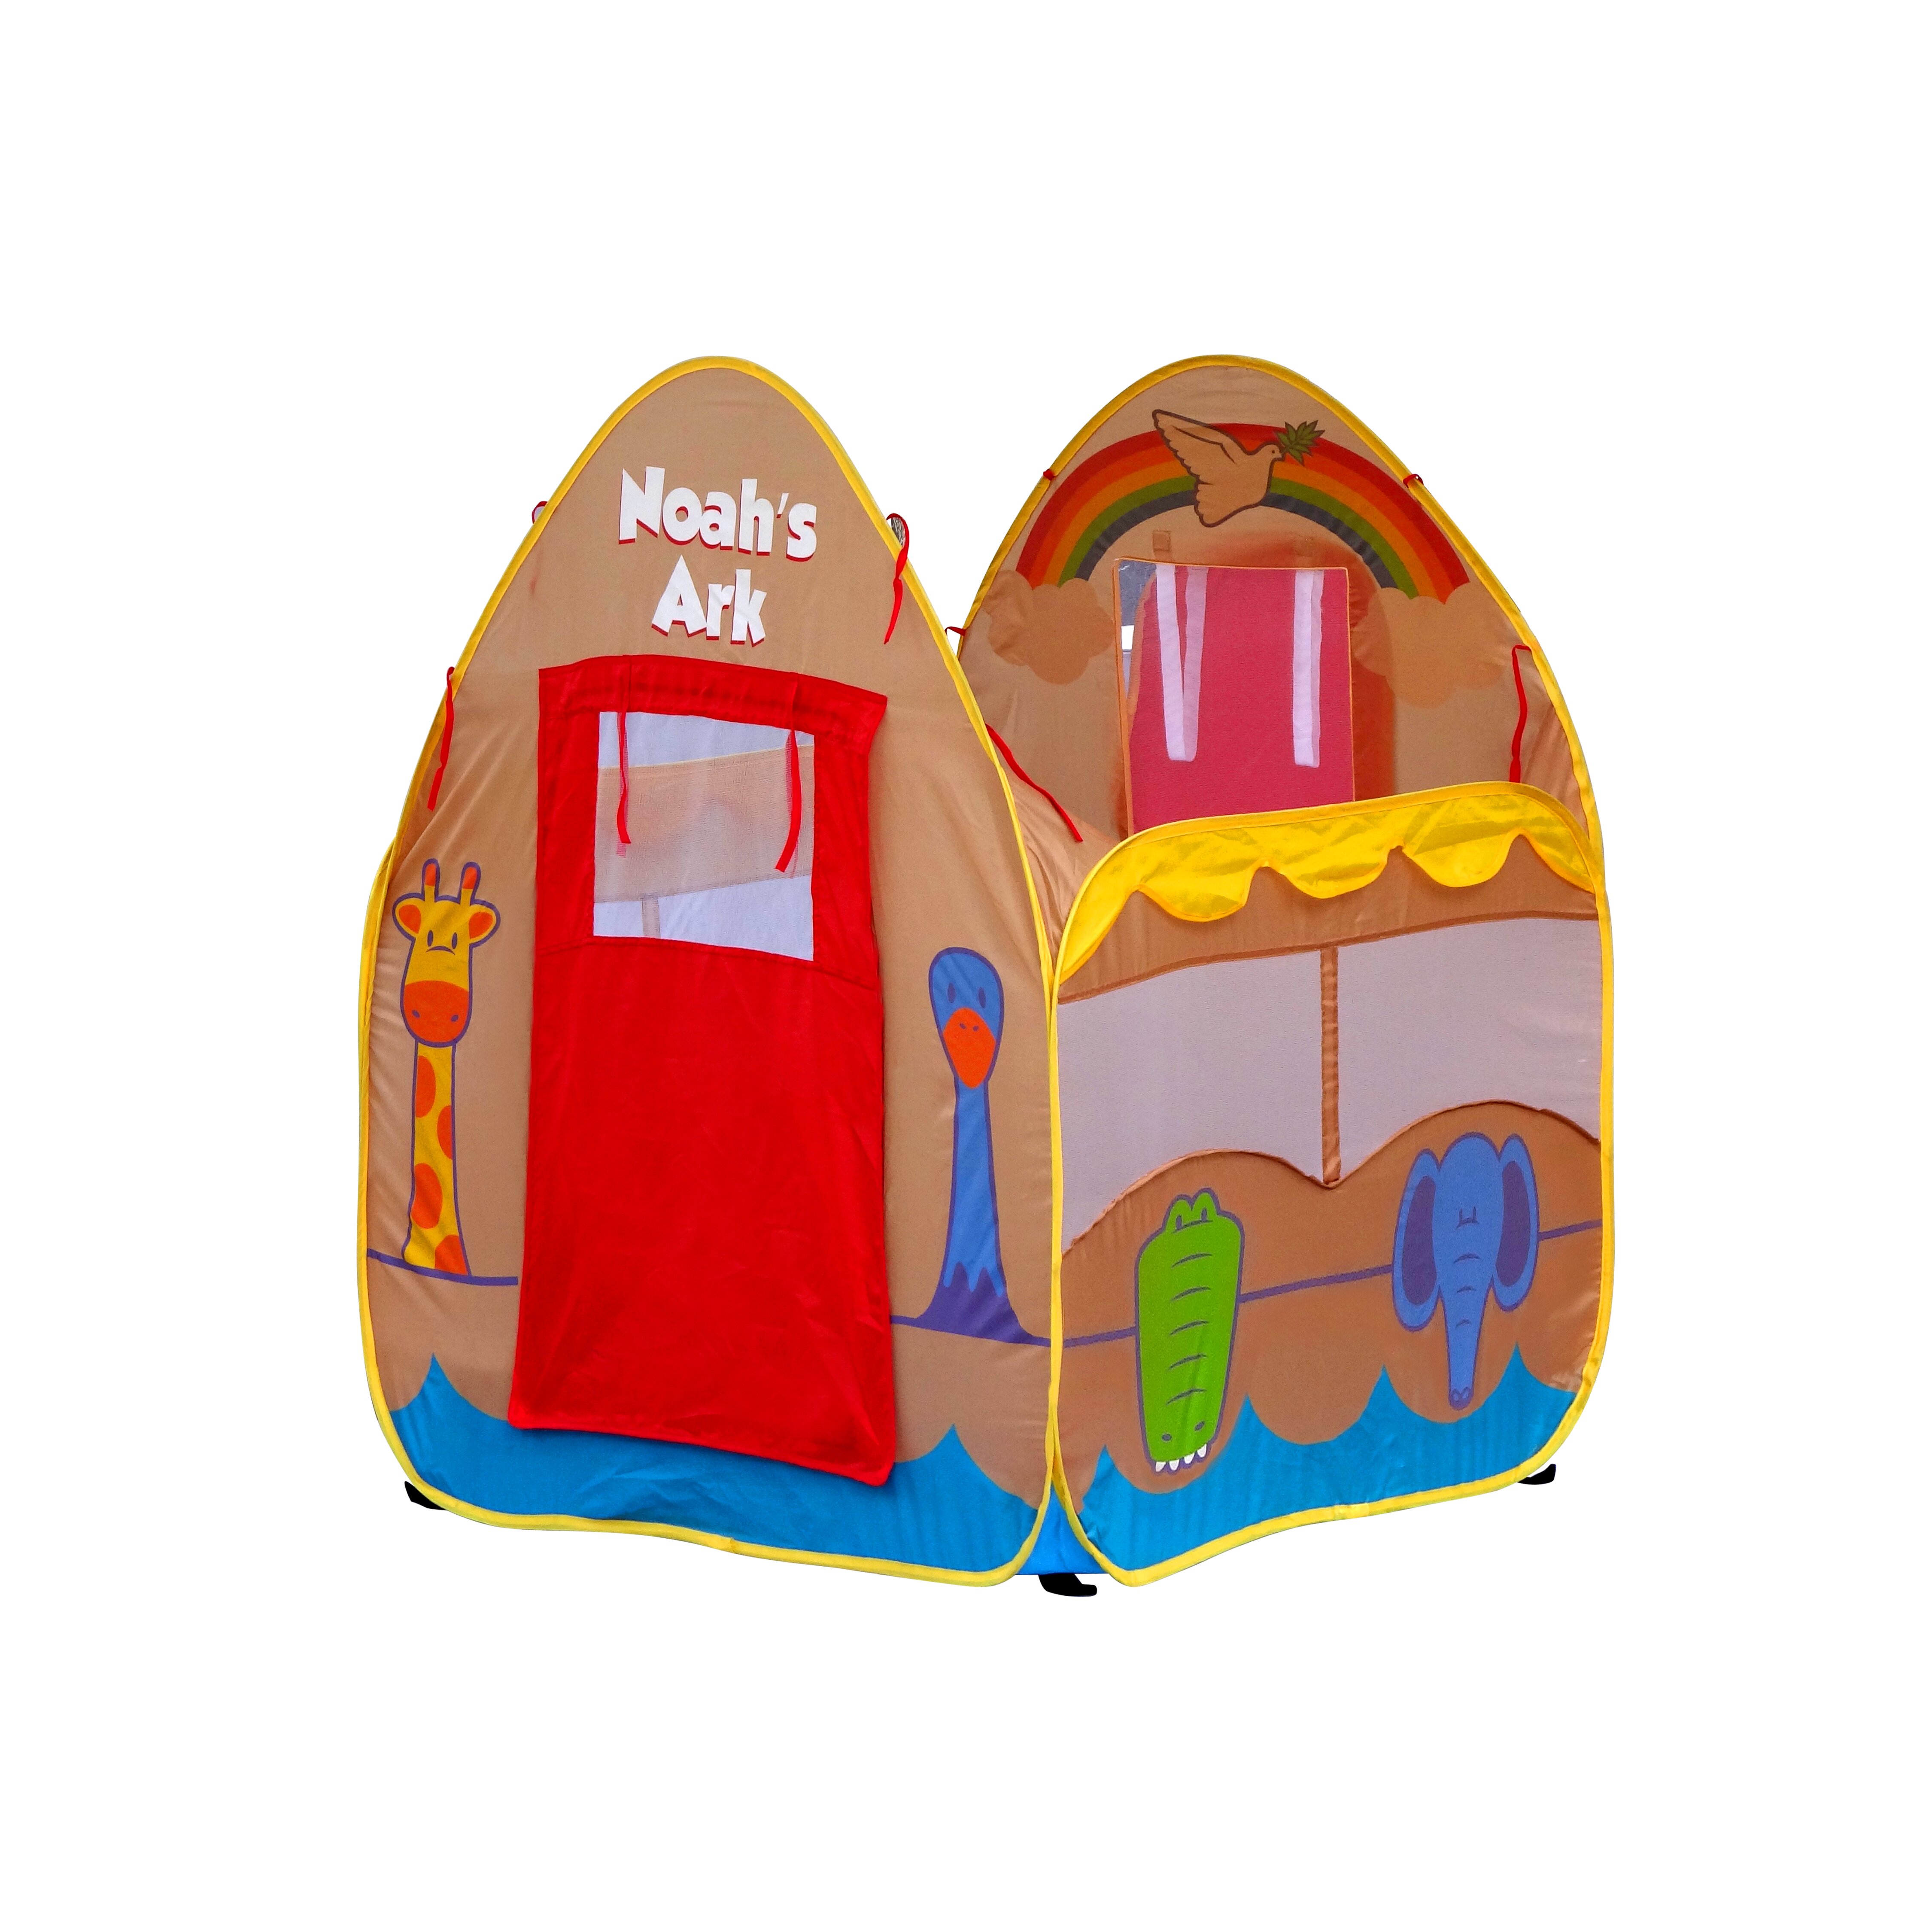 GigaTent Noah's Ark Play Tent & Reviews | Wayfair